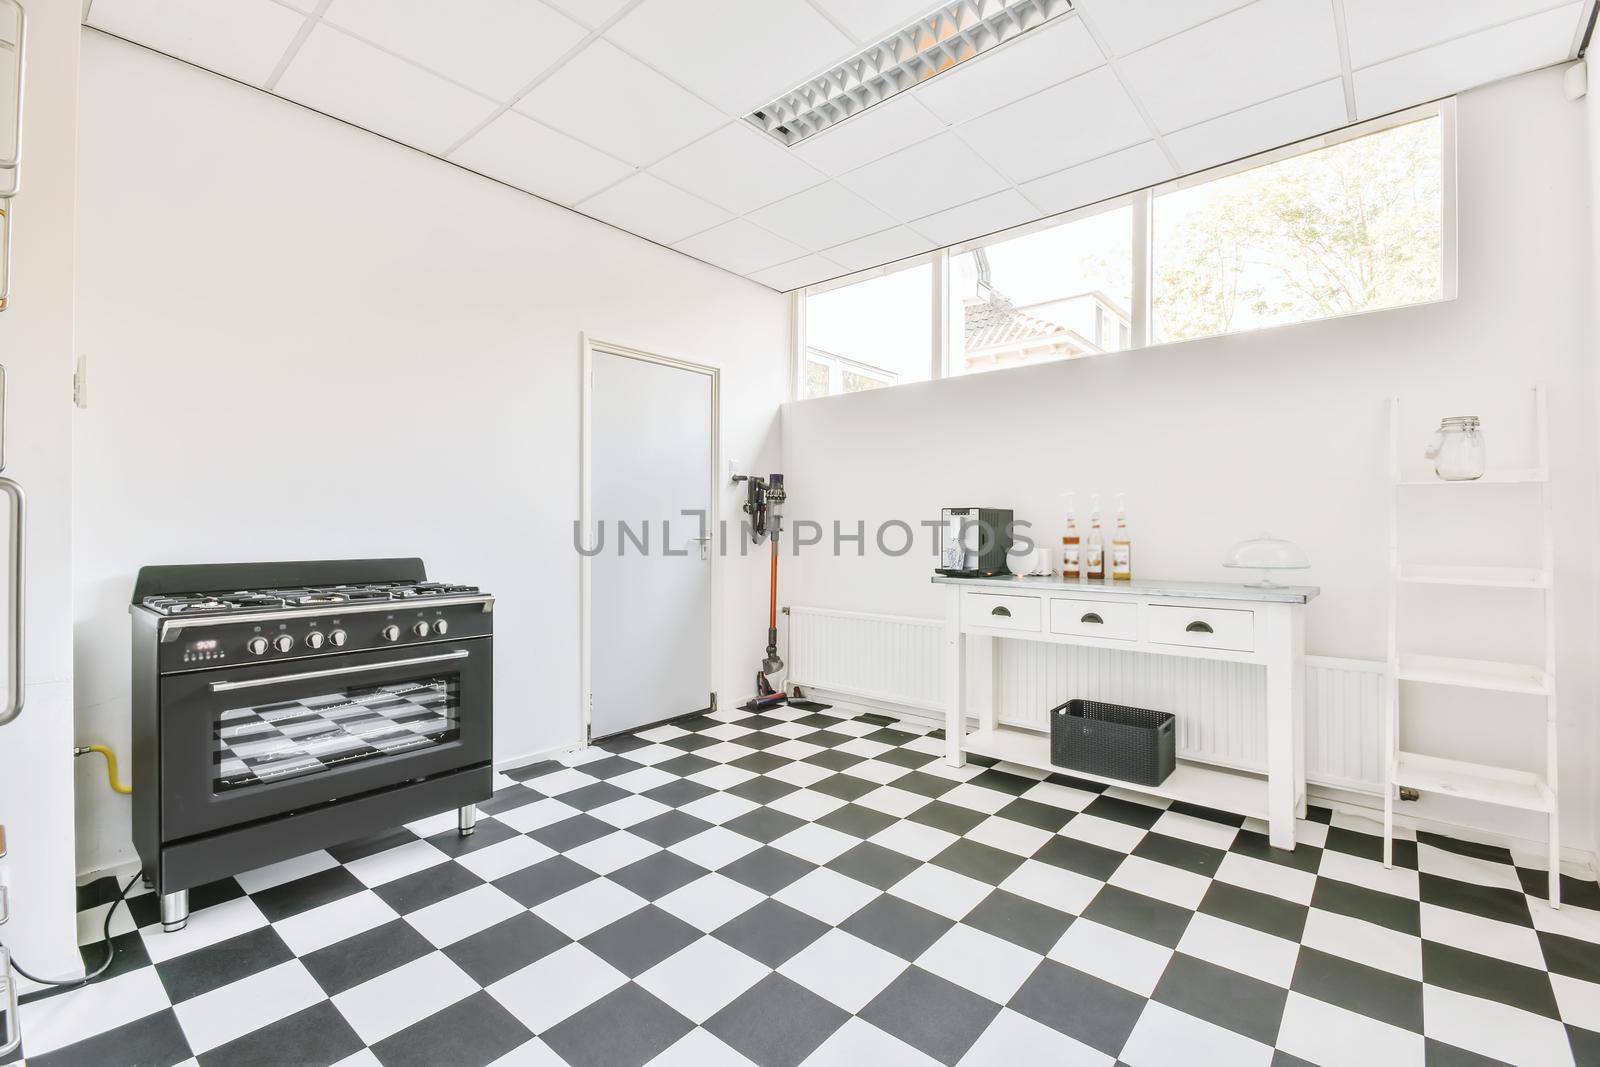 Design of wonderful room with checkerboard floor